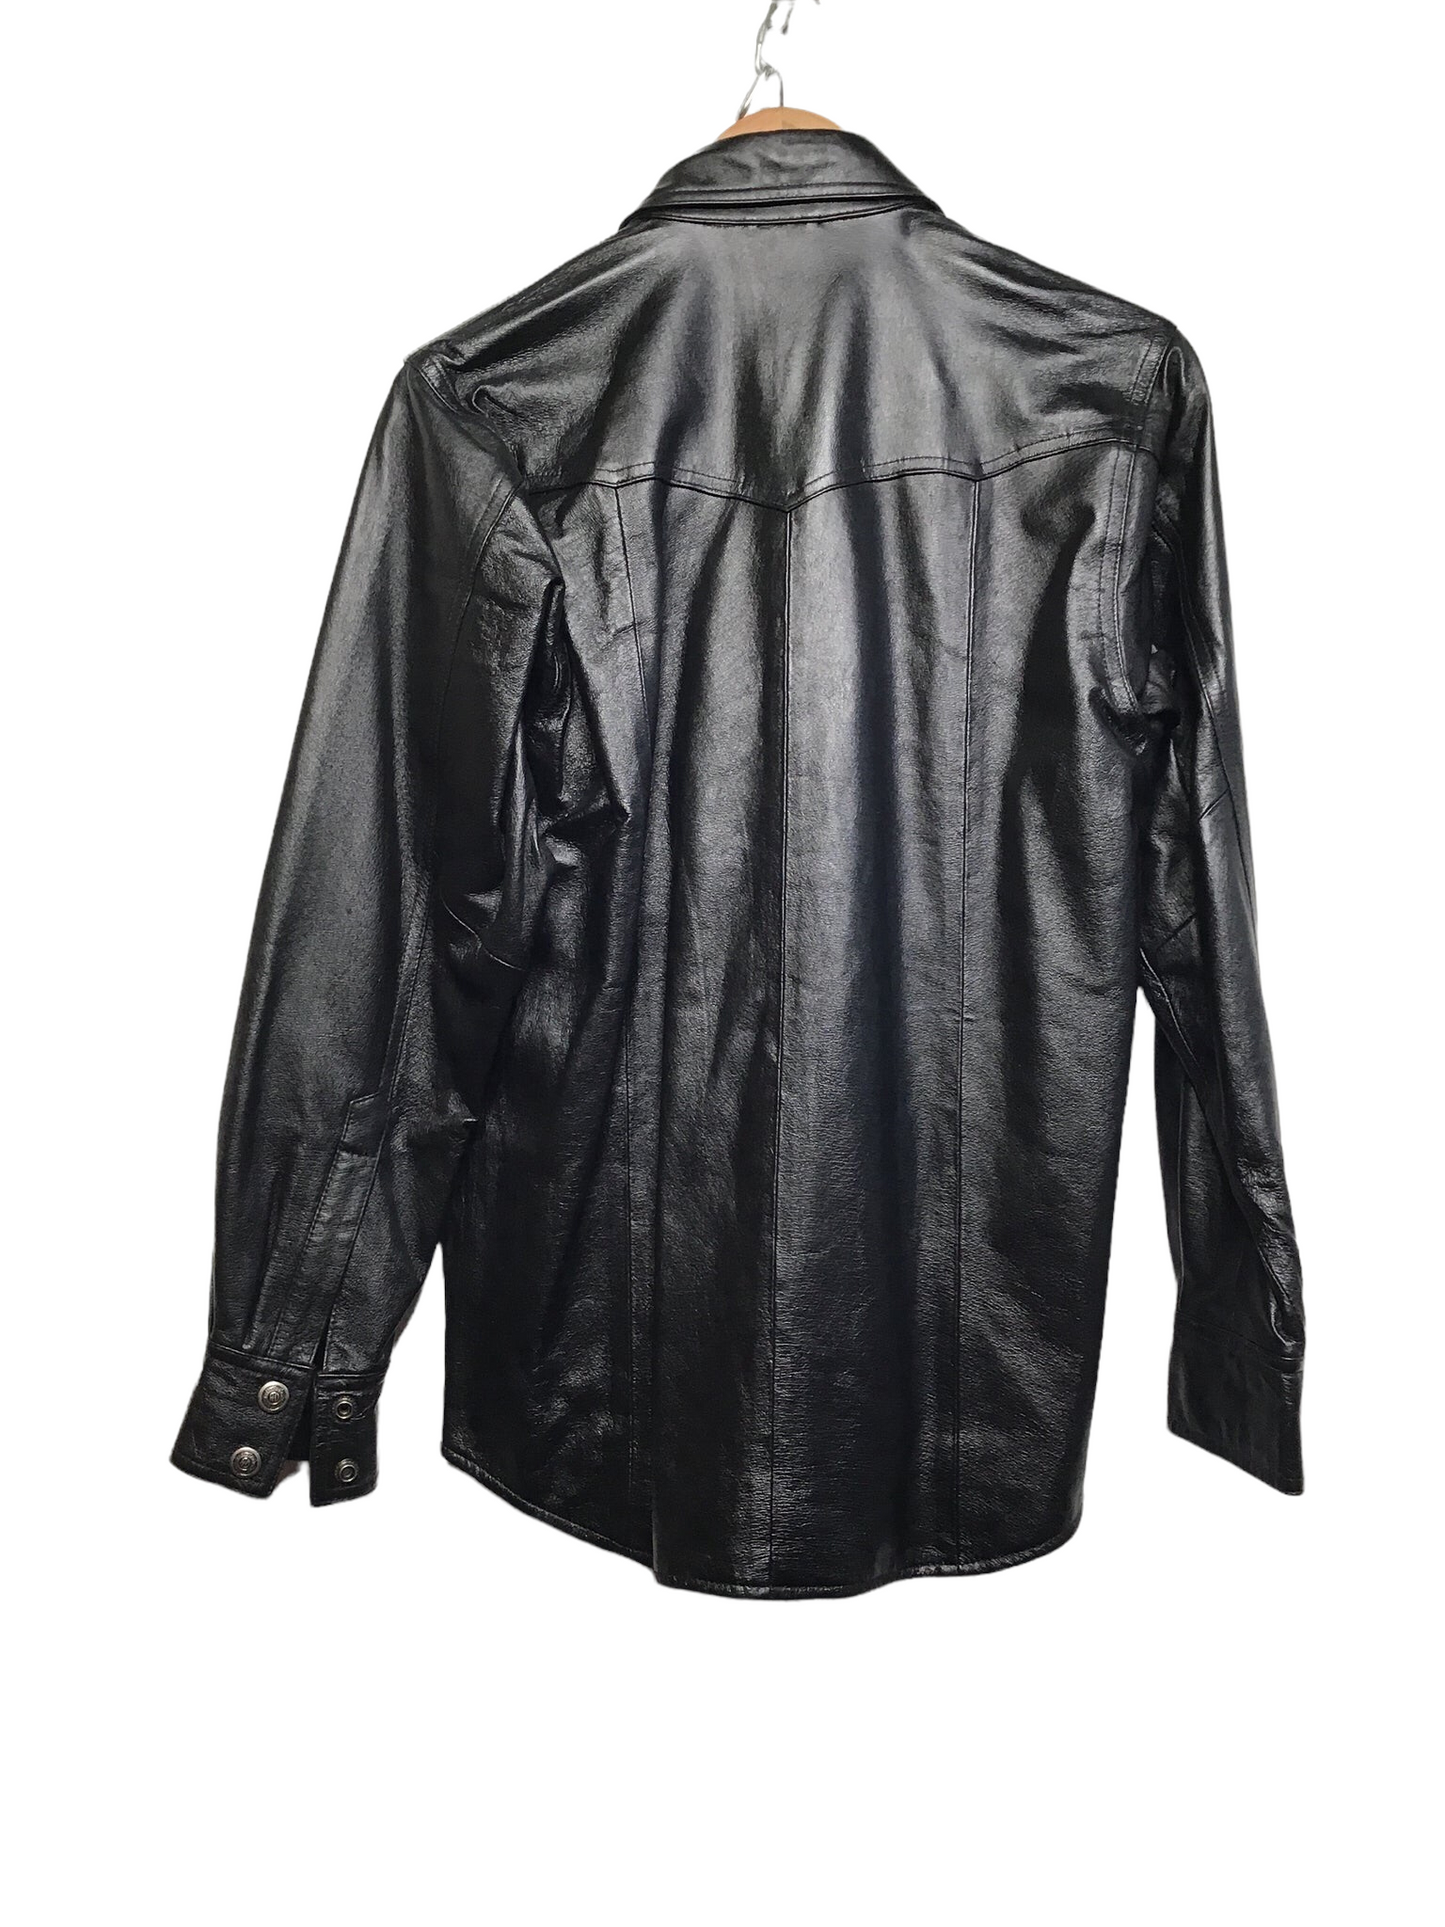 Harley Davidson Leather Shirt Jacket (Women’s Size S)